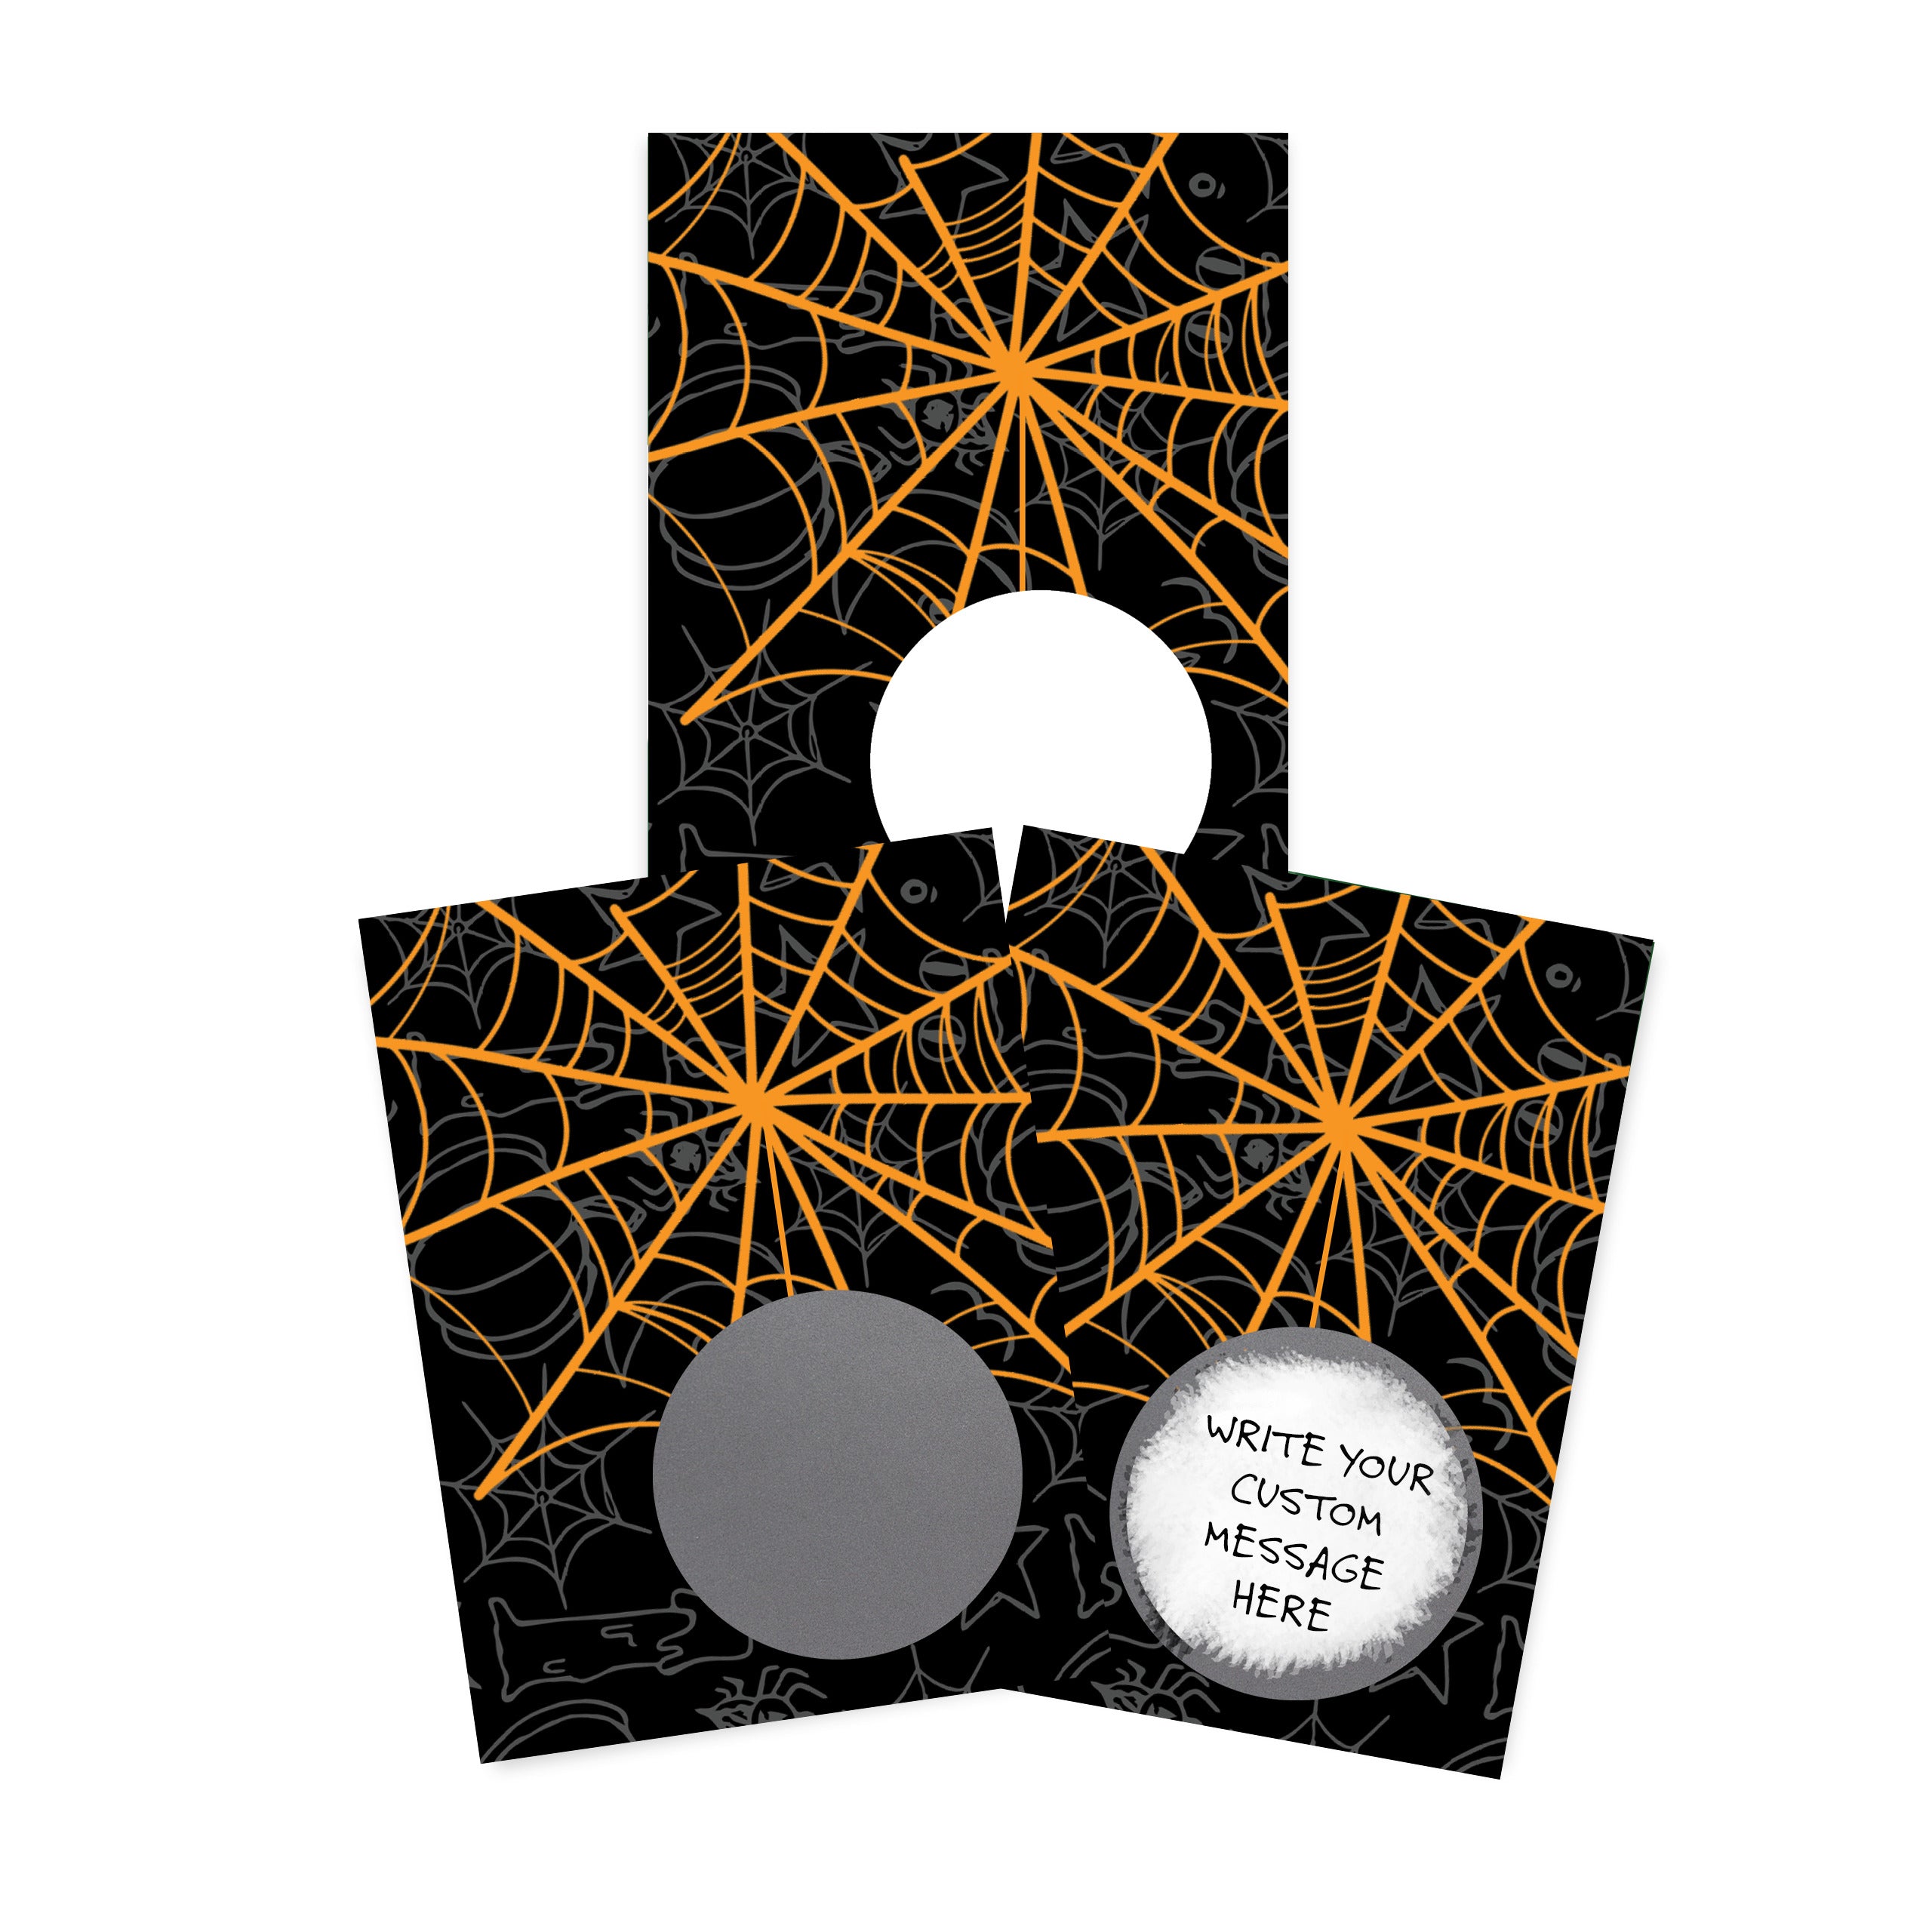 DIY Halloween Spider Web Make Your Own Scratch Offs - 50 Cards and 50 Scratch Off Stickers - My Scratch Offs